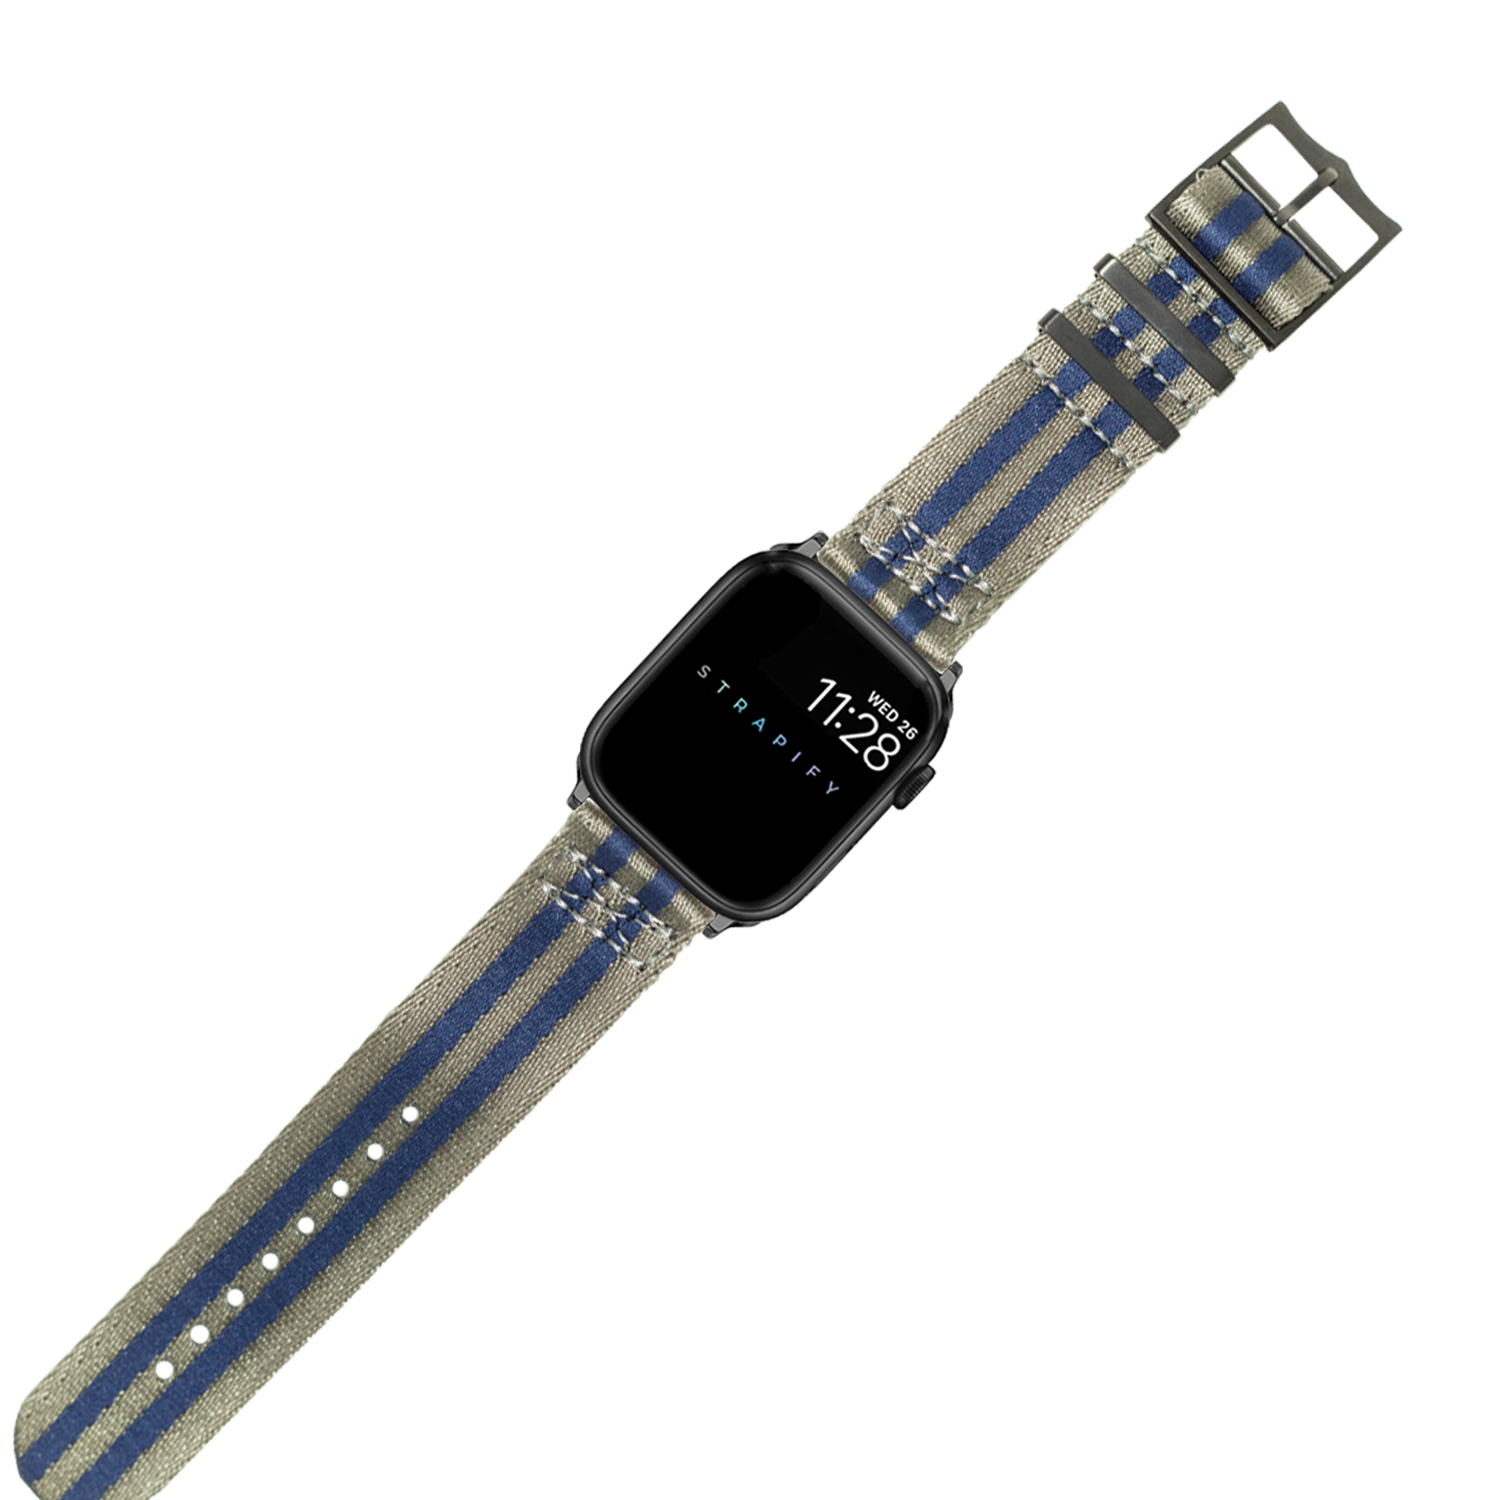 [Apple Watch] Ultra Militex - Stealth Blue Steel [Black Hardware]